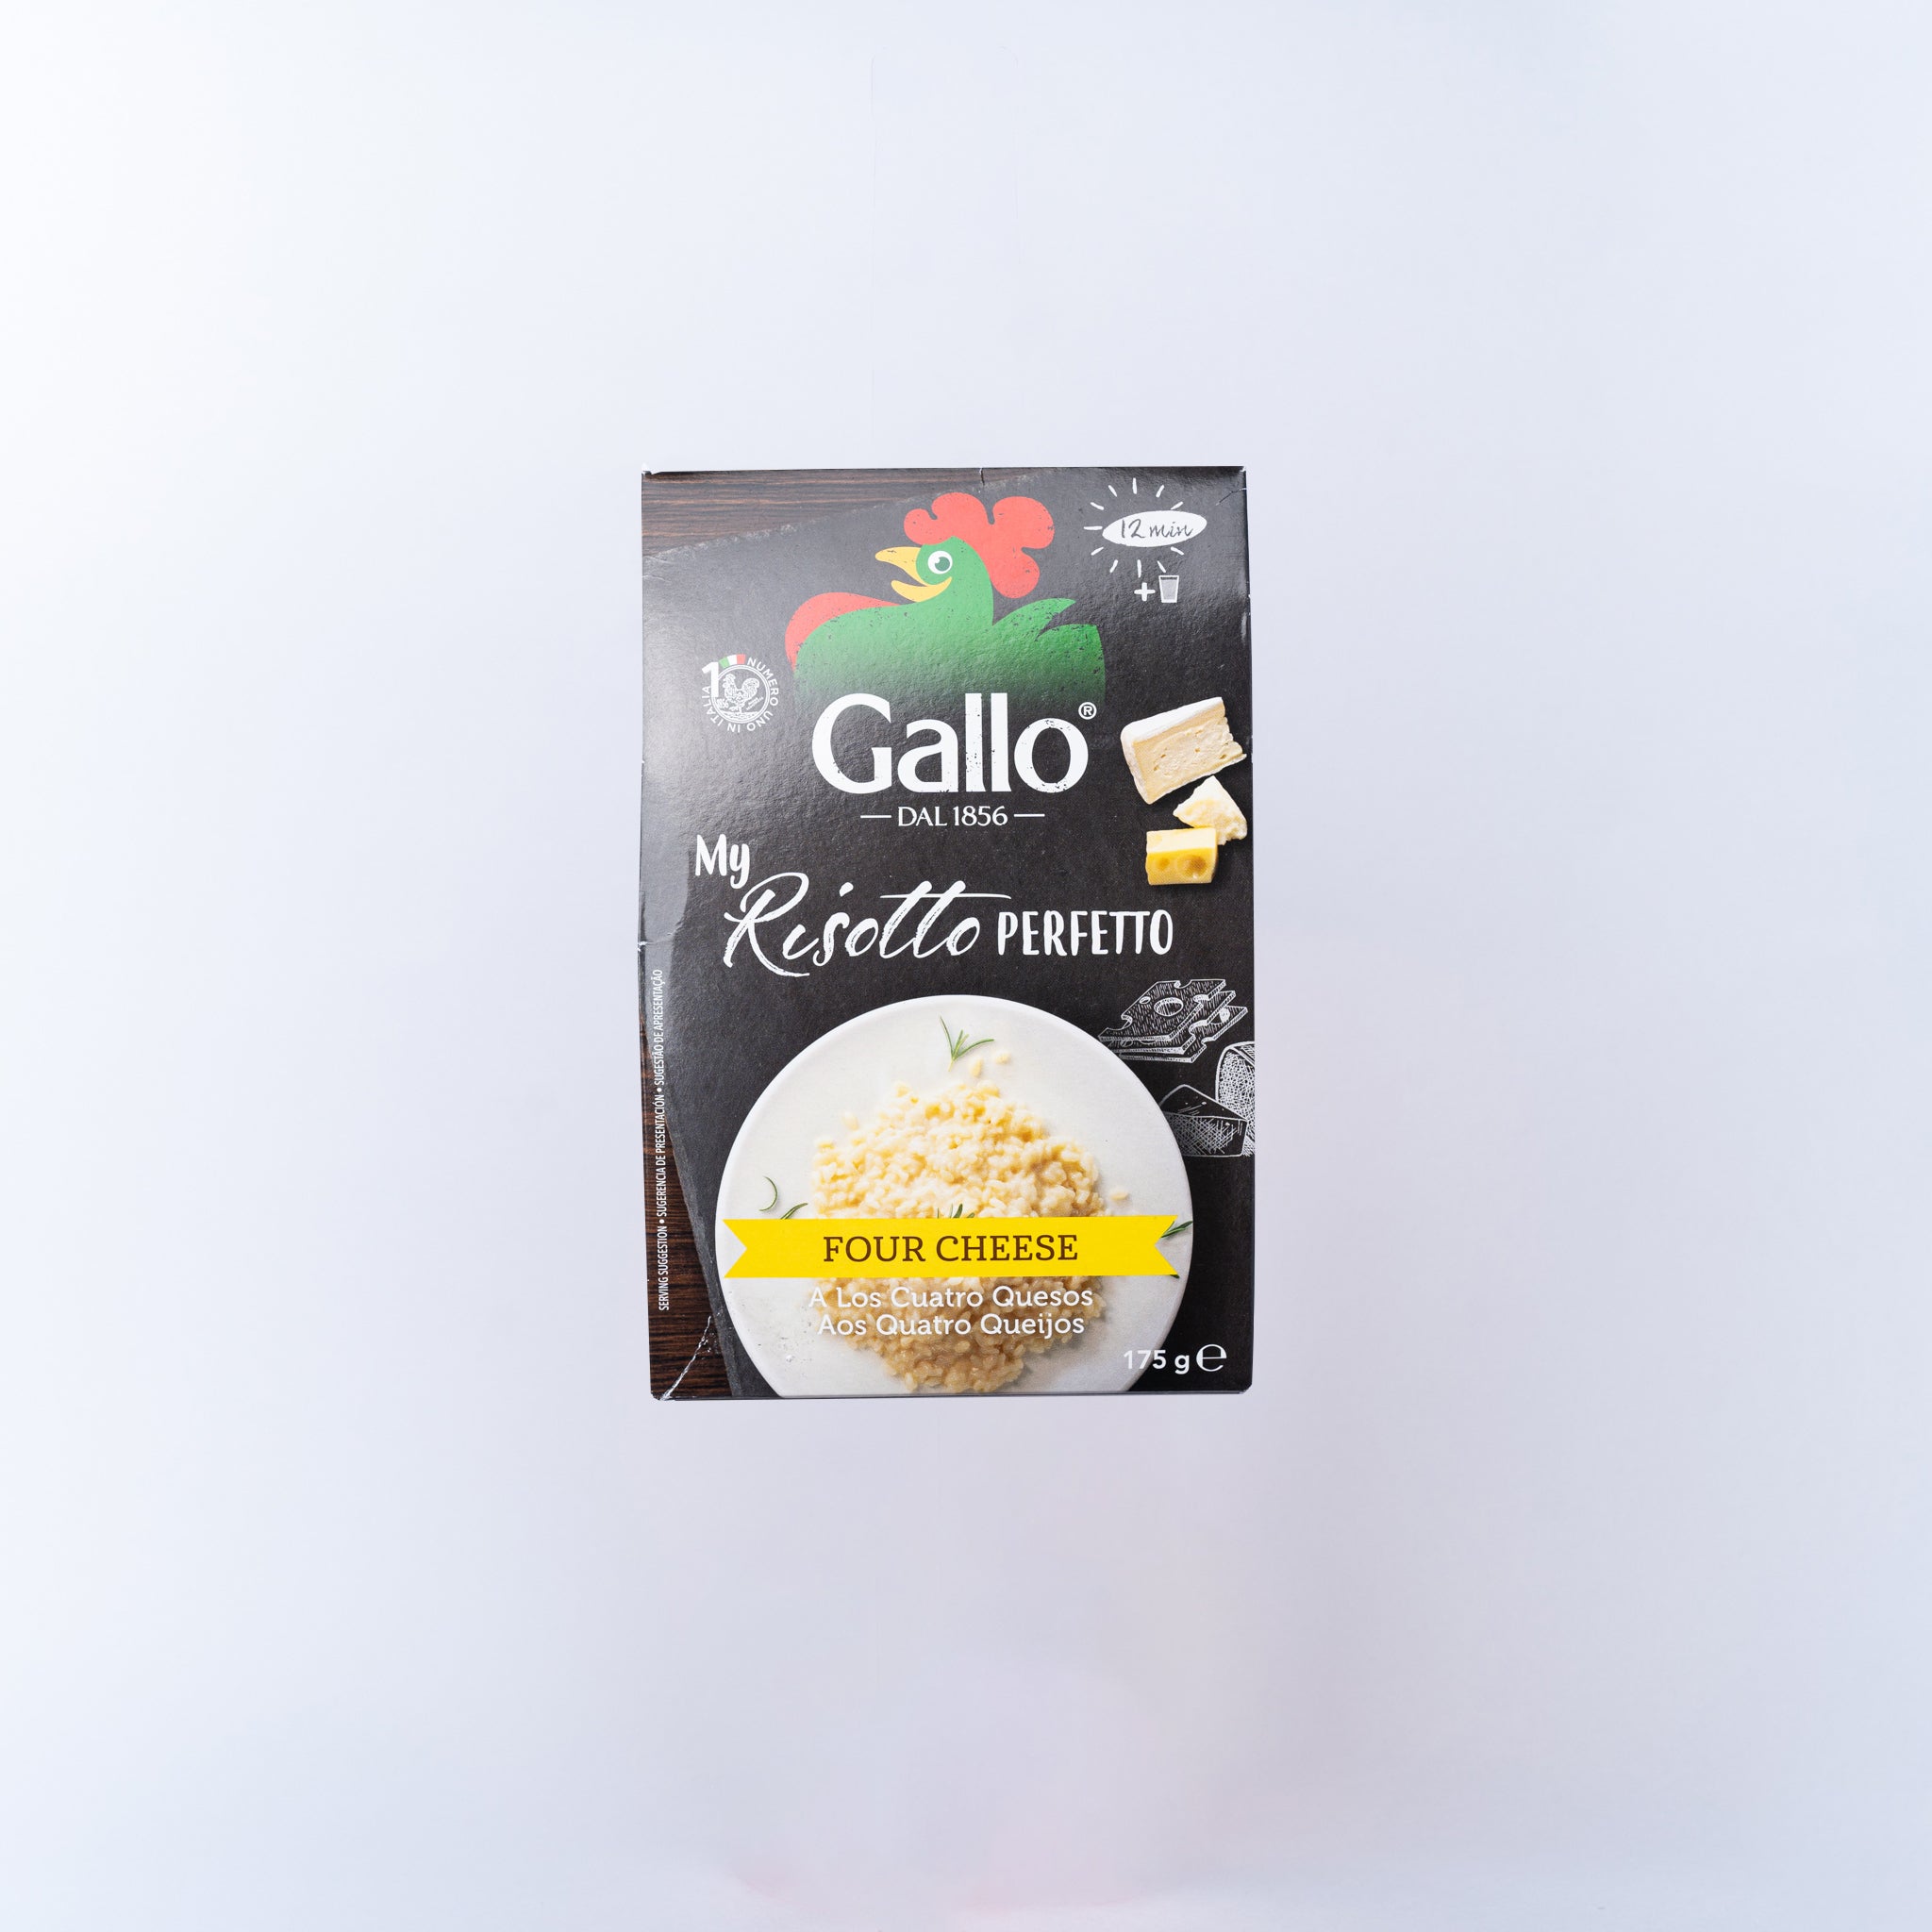 A box of Gallo Risotto Four Cheese 175g.